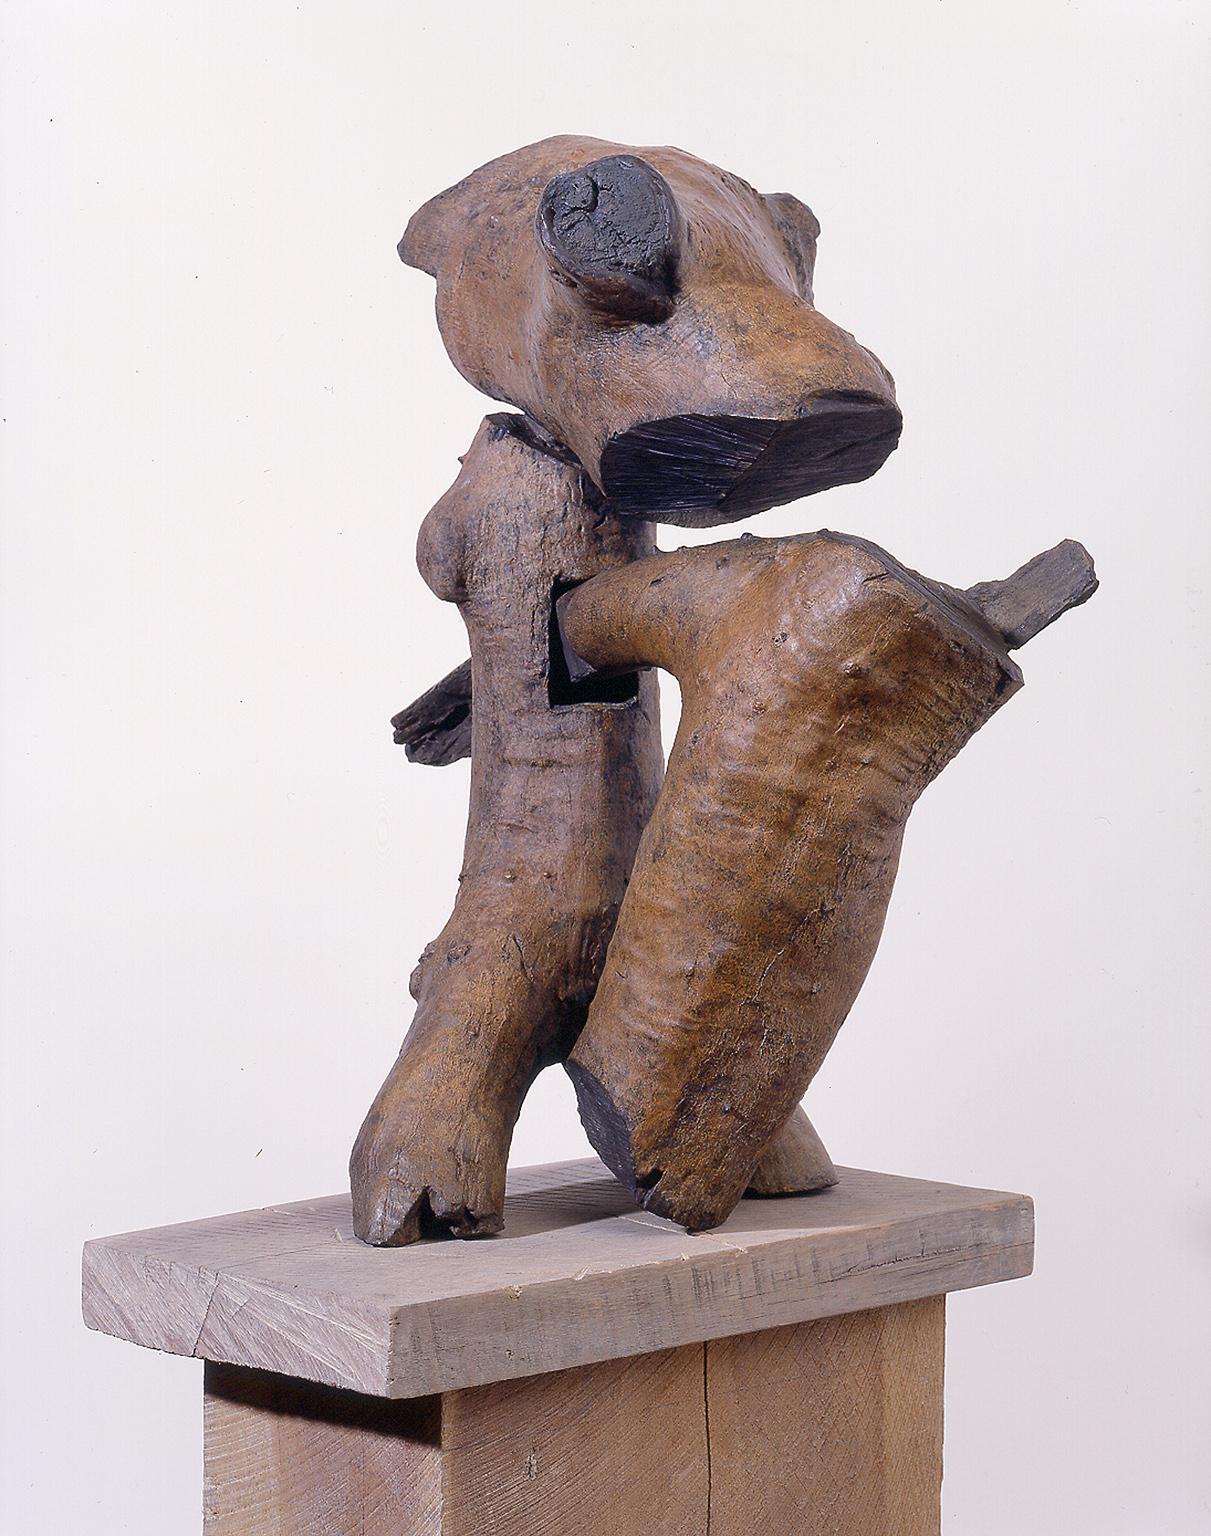 Harry H. Gordon Abstract Sculpture - "Tango", Abstract, Organic, Unique Cast Bronze Metal Sculpture